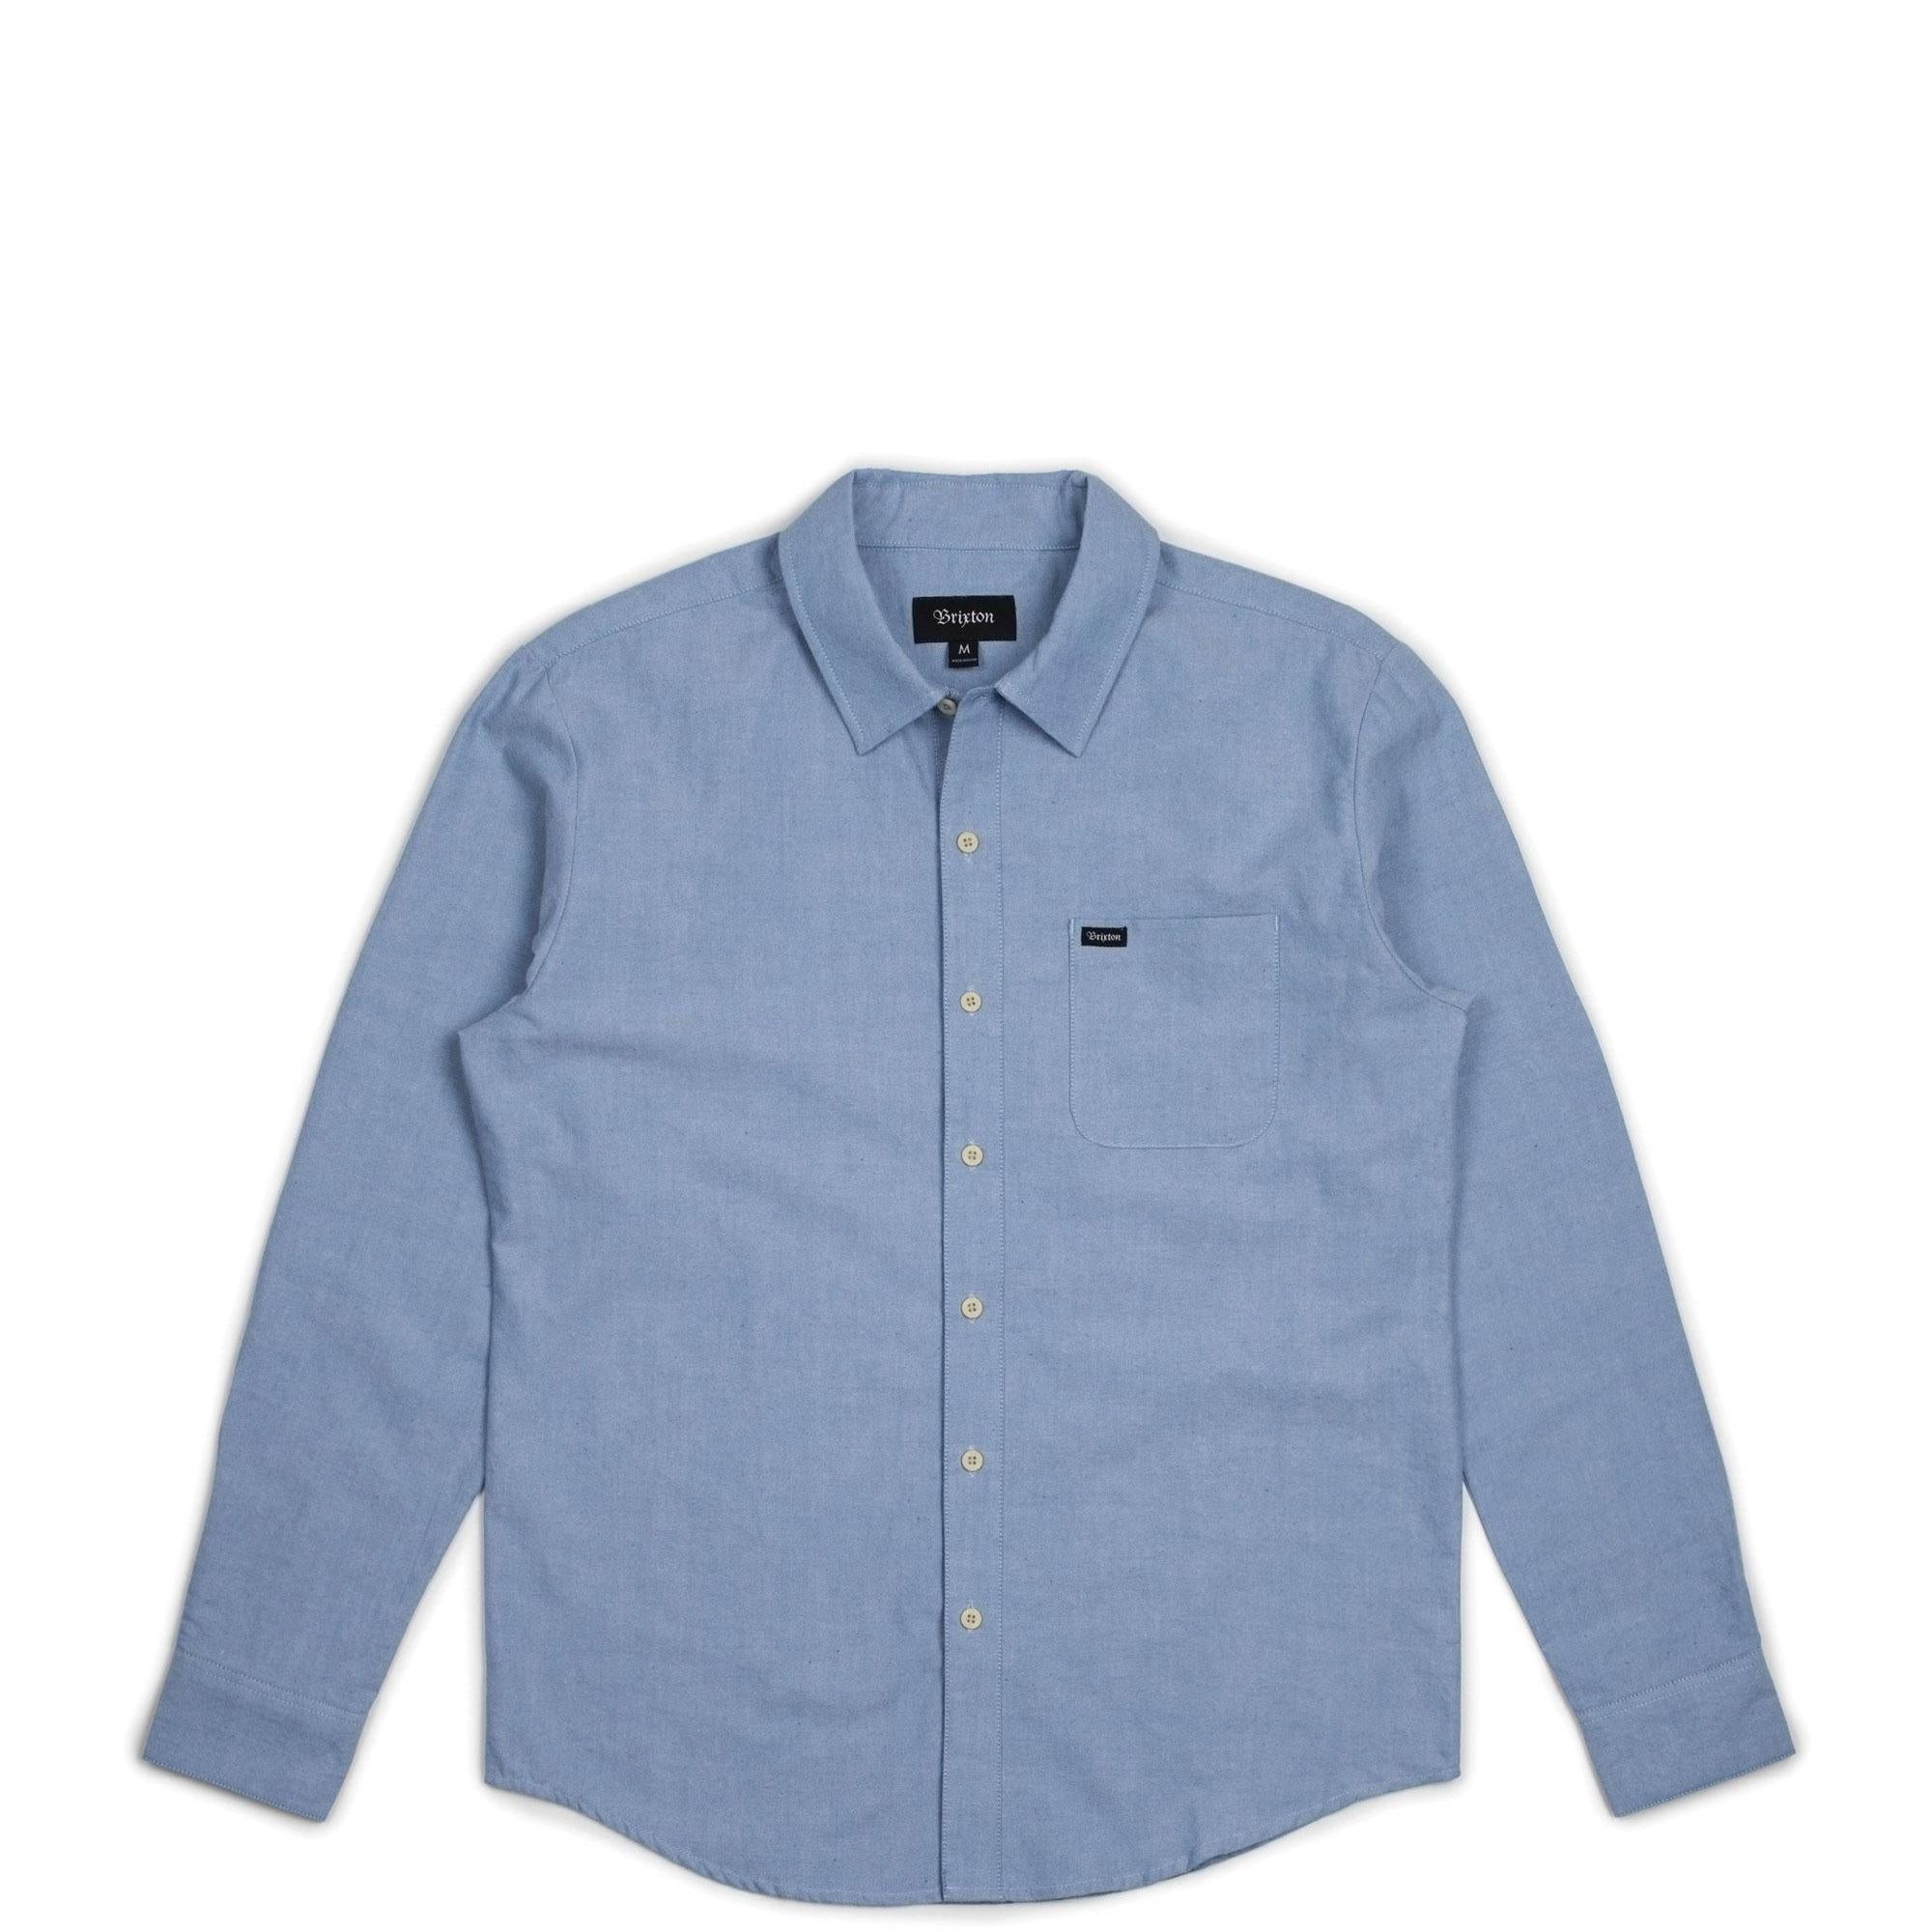 Brixton Charter Oxford L/S shirt 01102-LBLCH Light blue chambray – Norwood